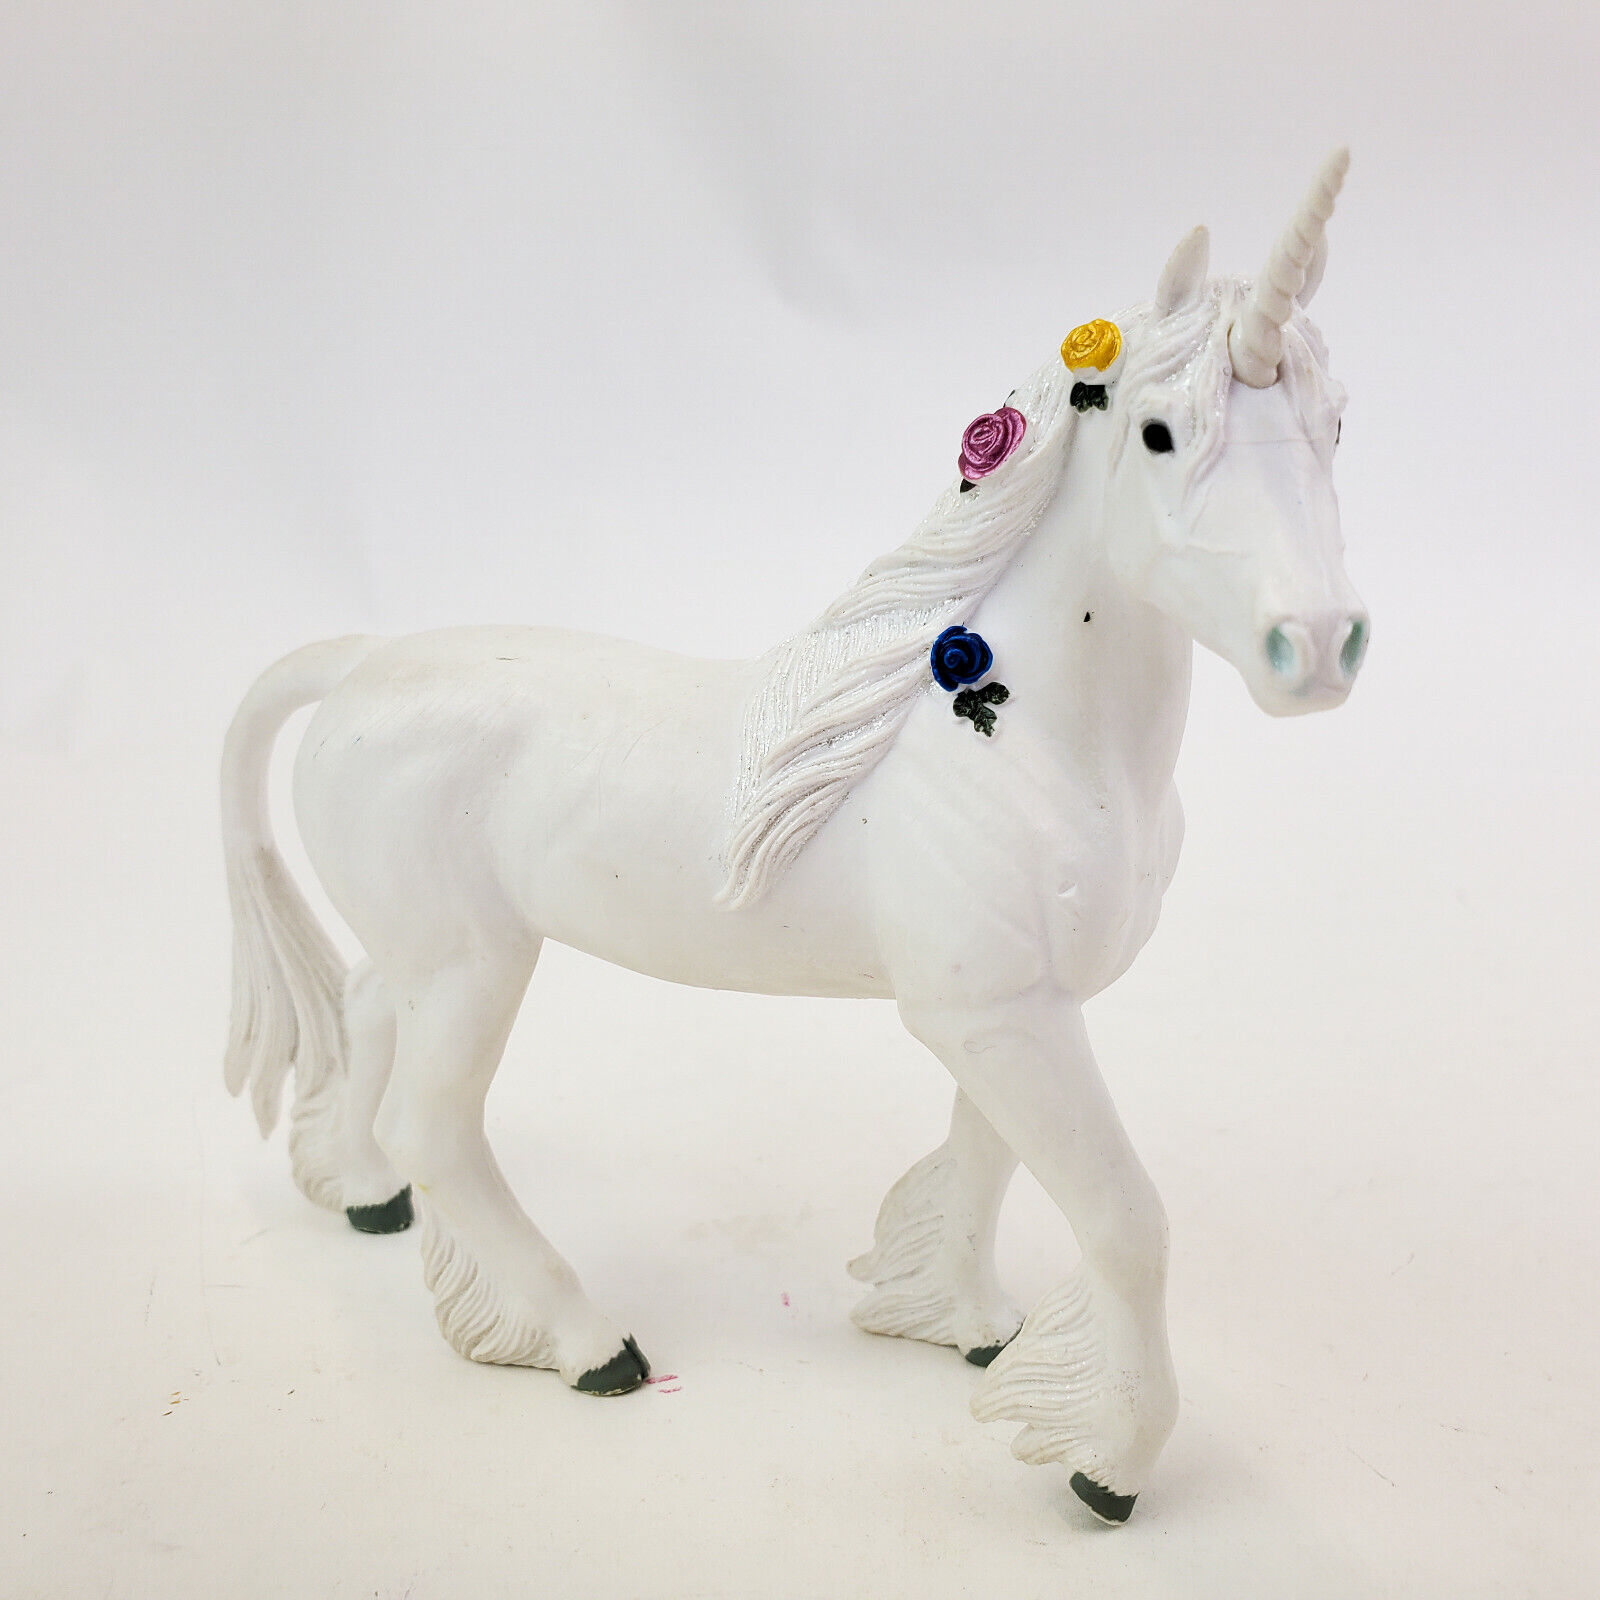 2008 Safari Ltd. Mythical Realms White Unicorn Horse With Flowers Figure